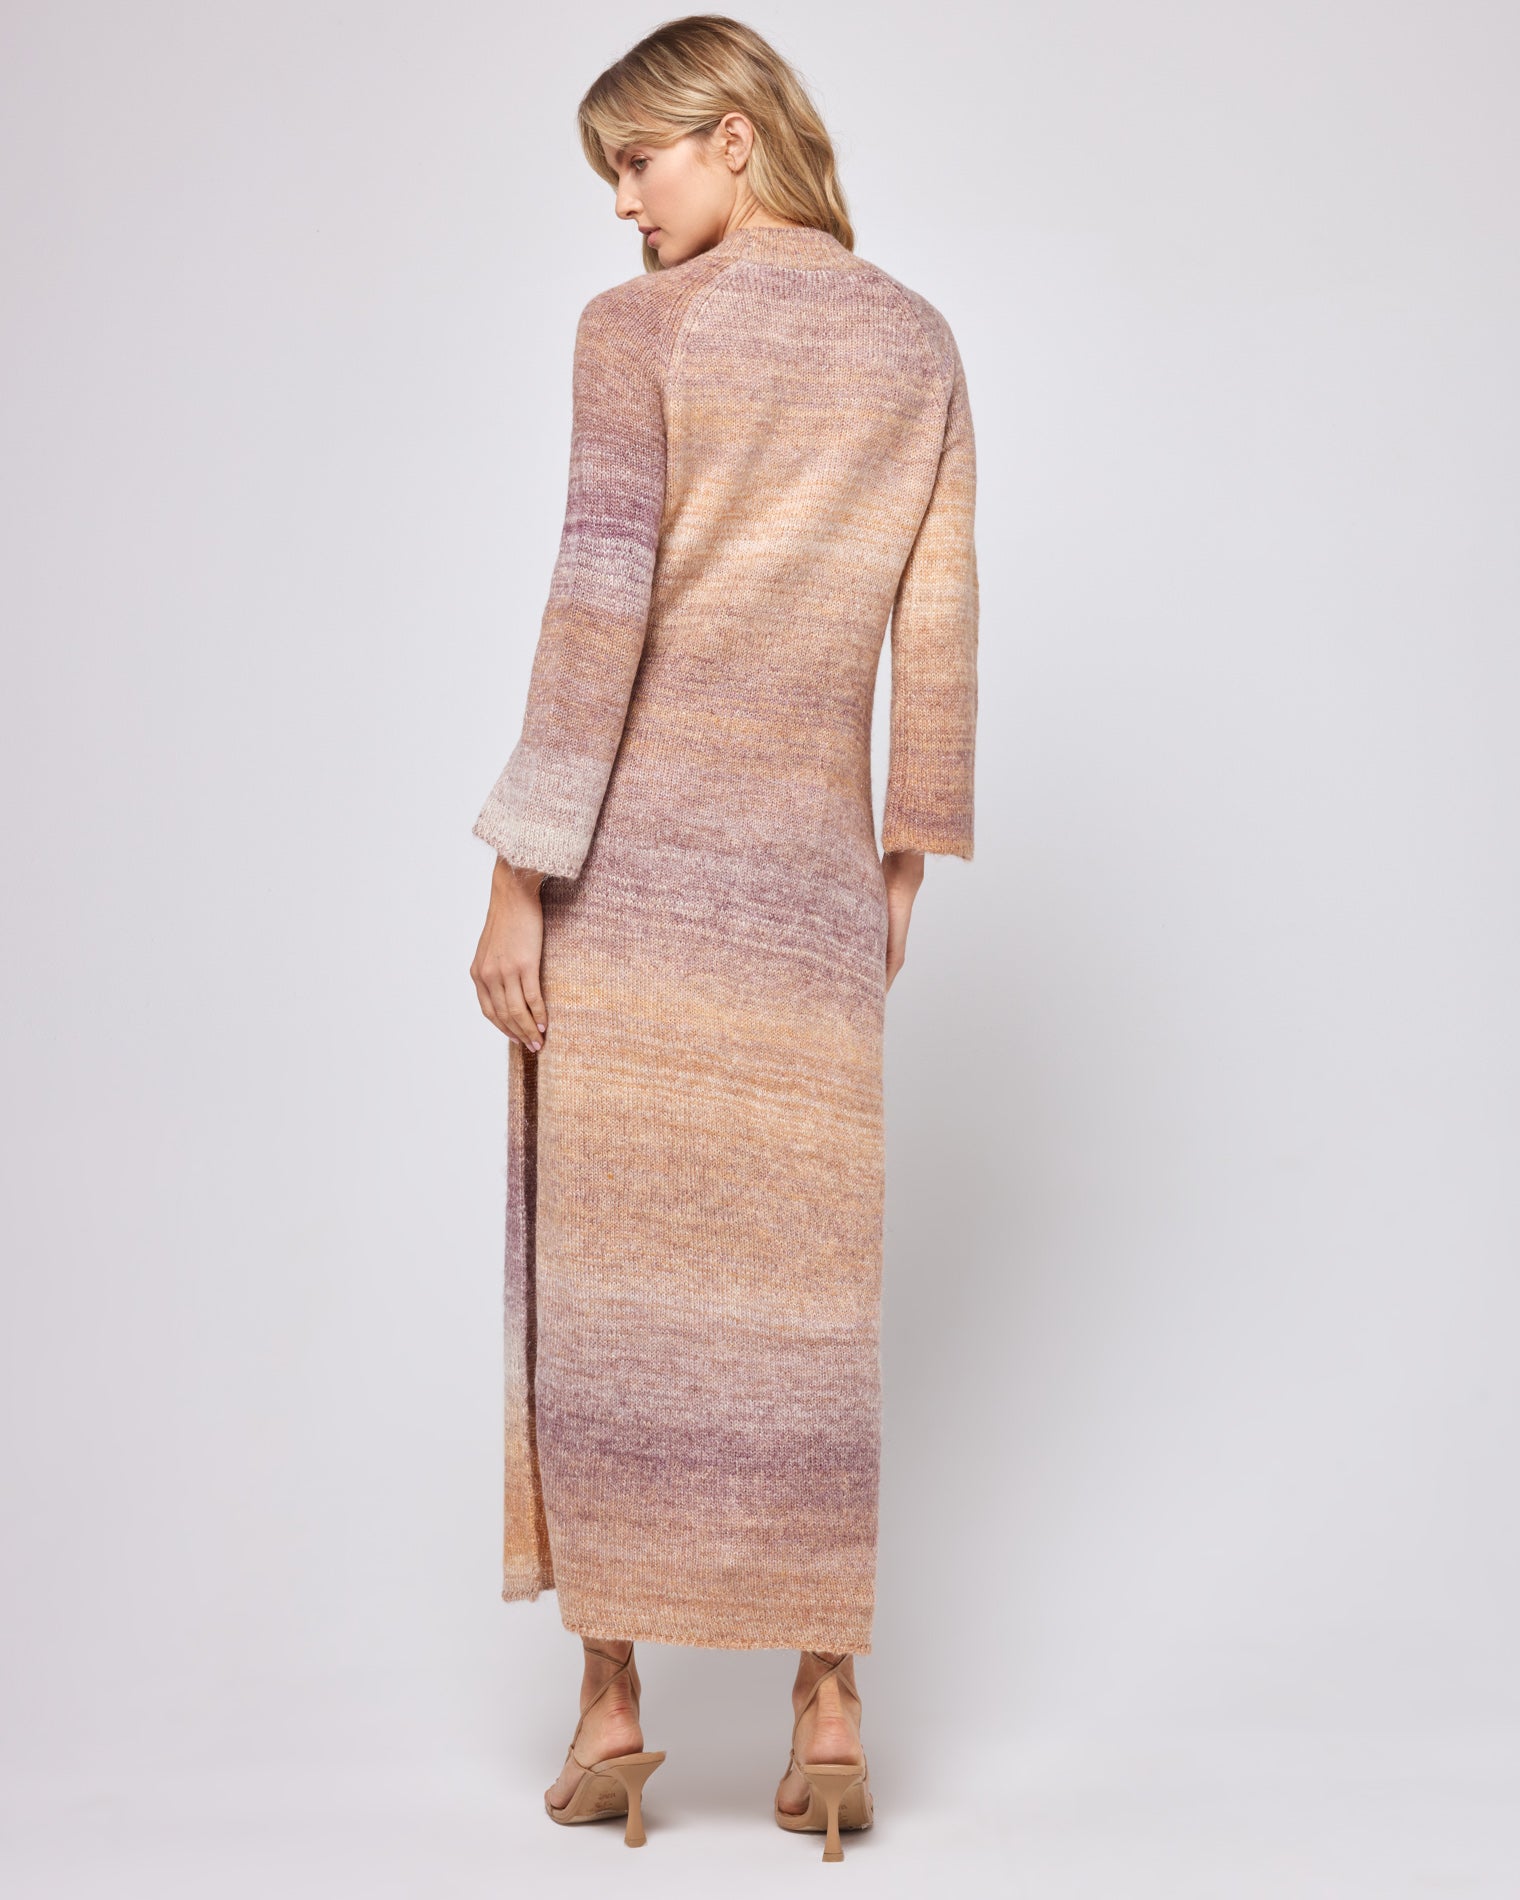 Monroe Dress Temescal Canyon | Model: Lura (size: S)